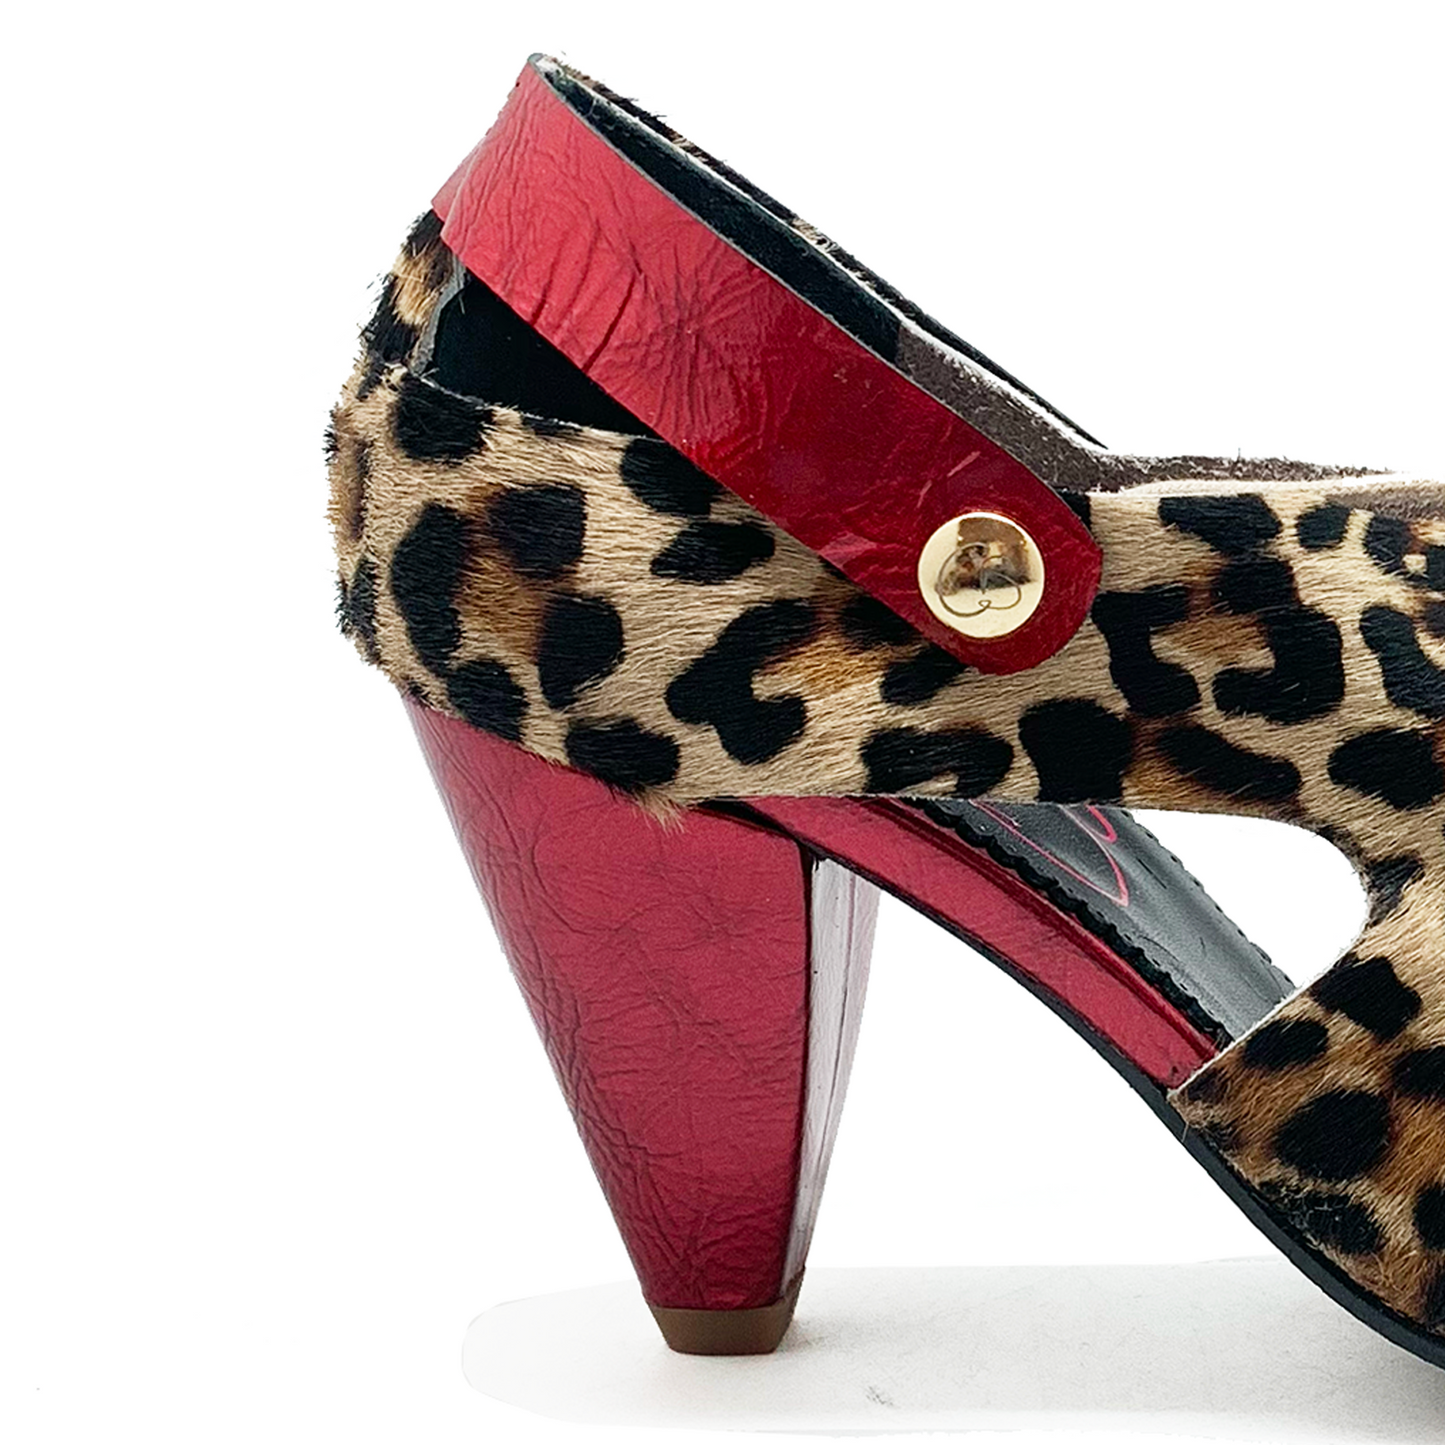 Coco-Leopard/Red heel sandal